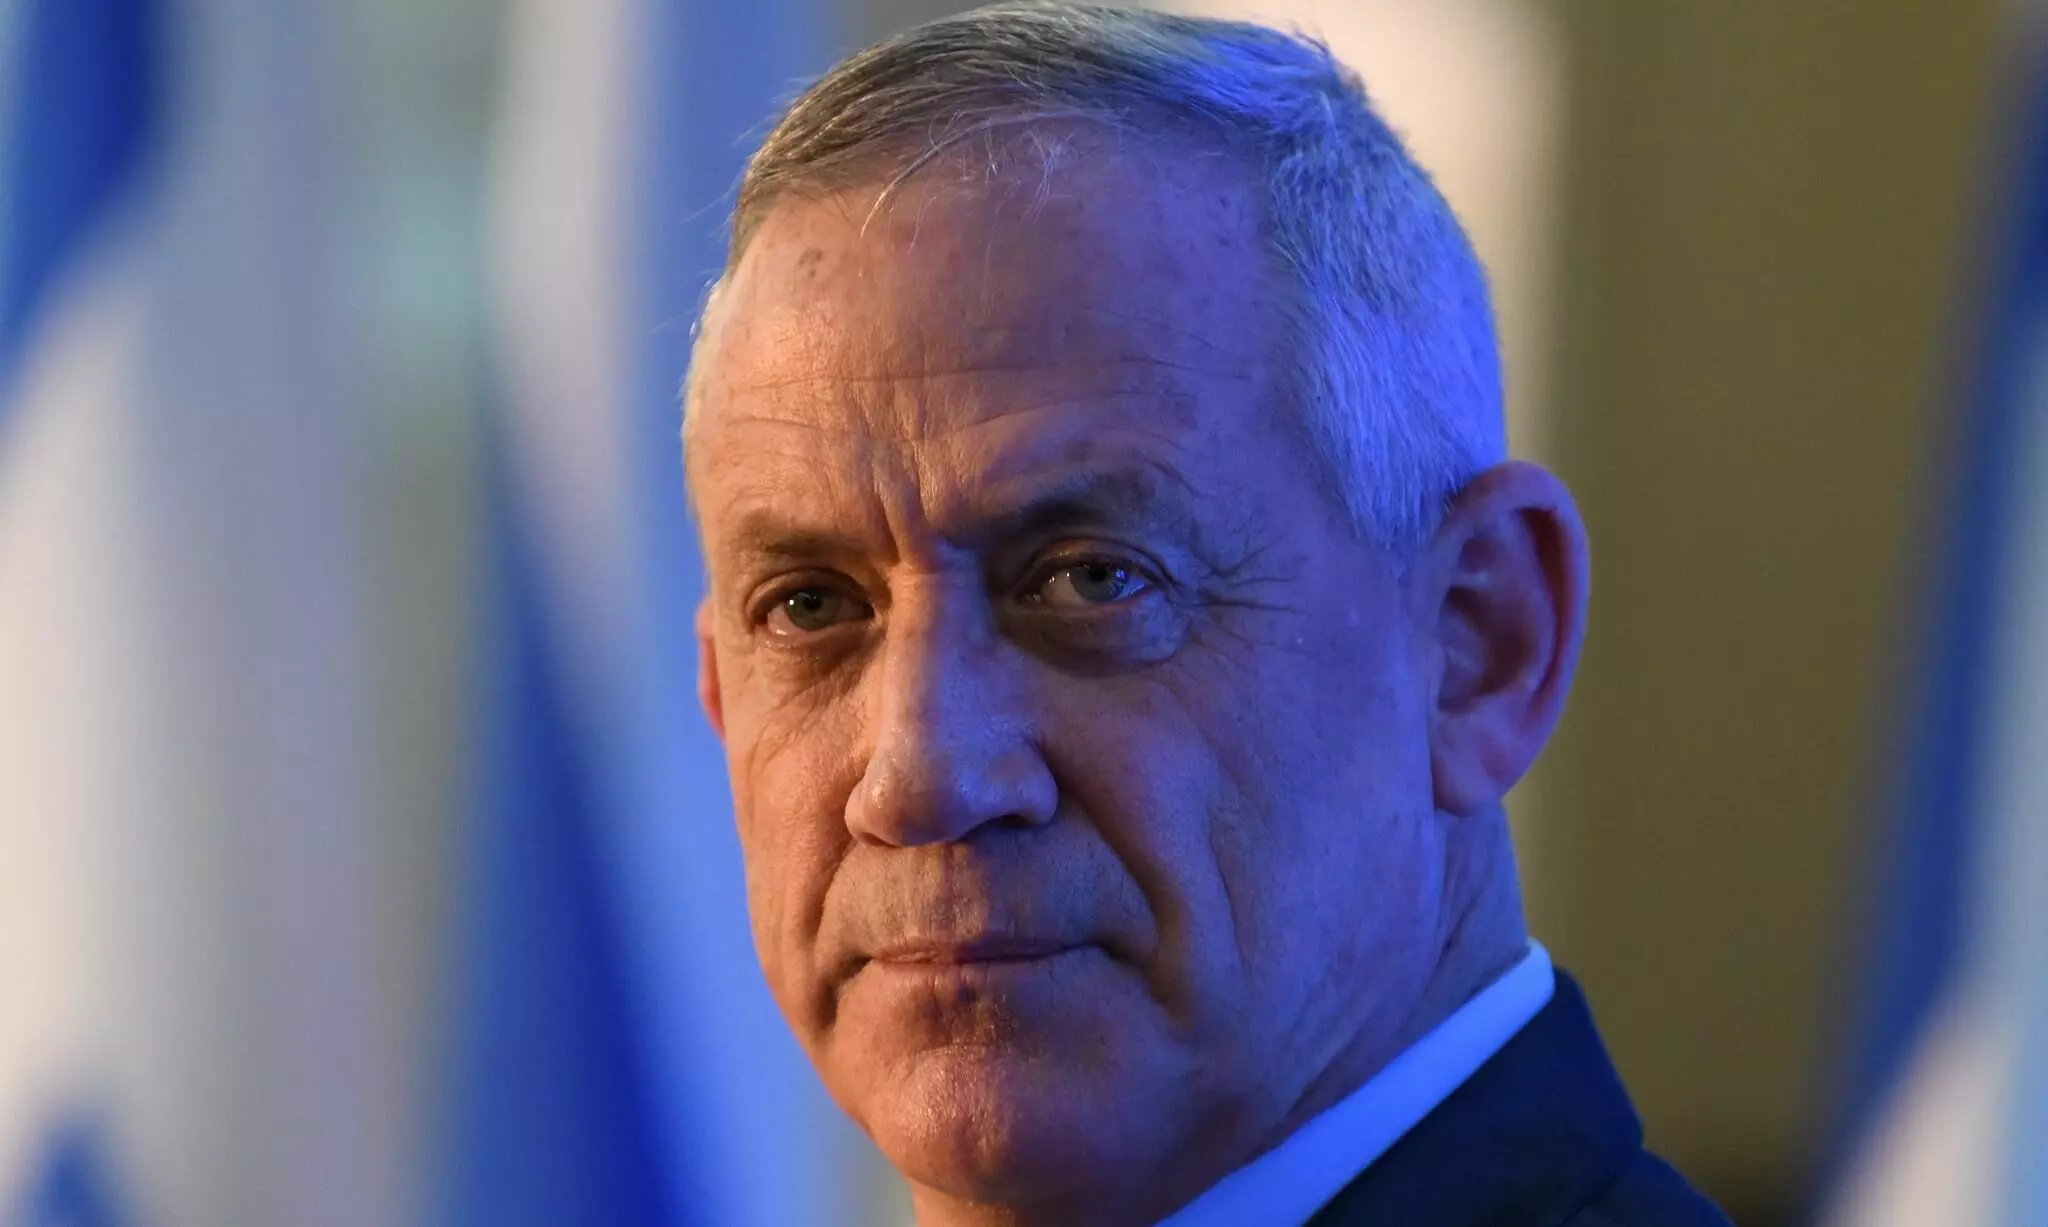 Ready to talk with Hamas,says Israel defense chief